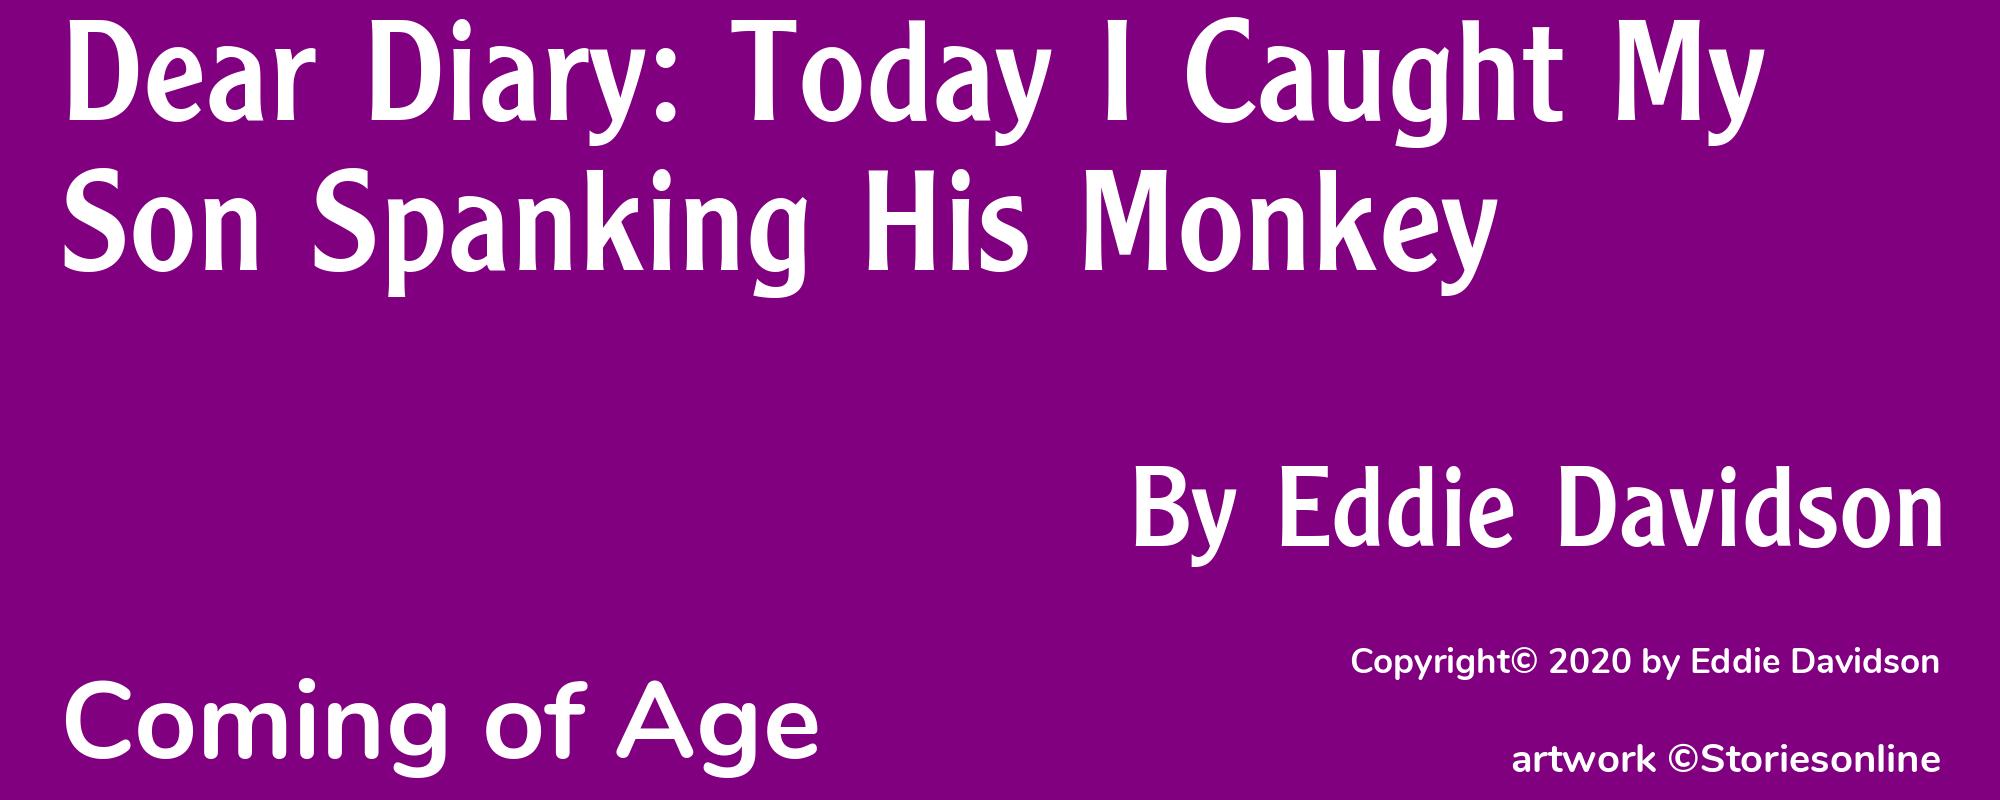 Dear Diary: Today I Caught My Son Spanking His Monkey - Cover